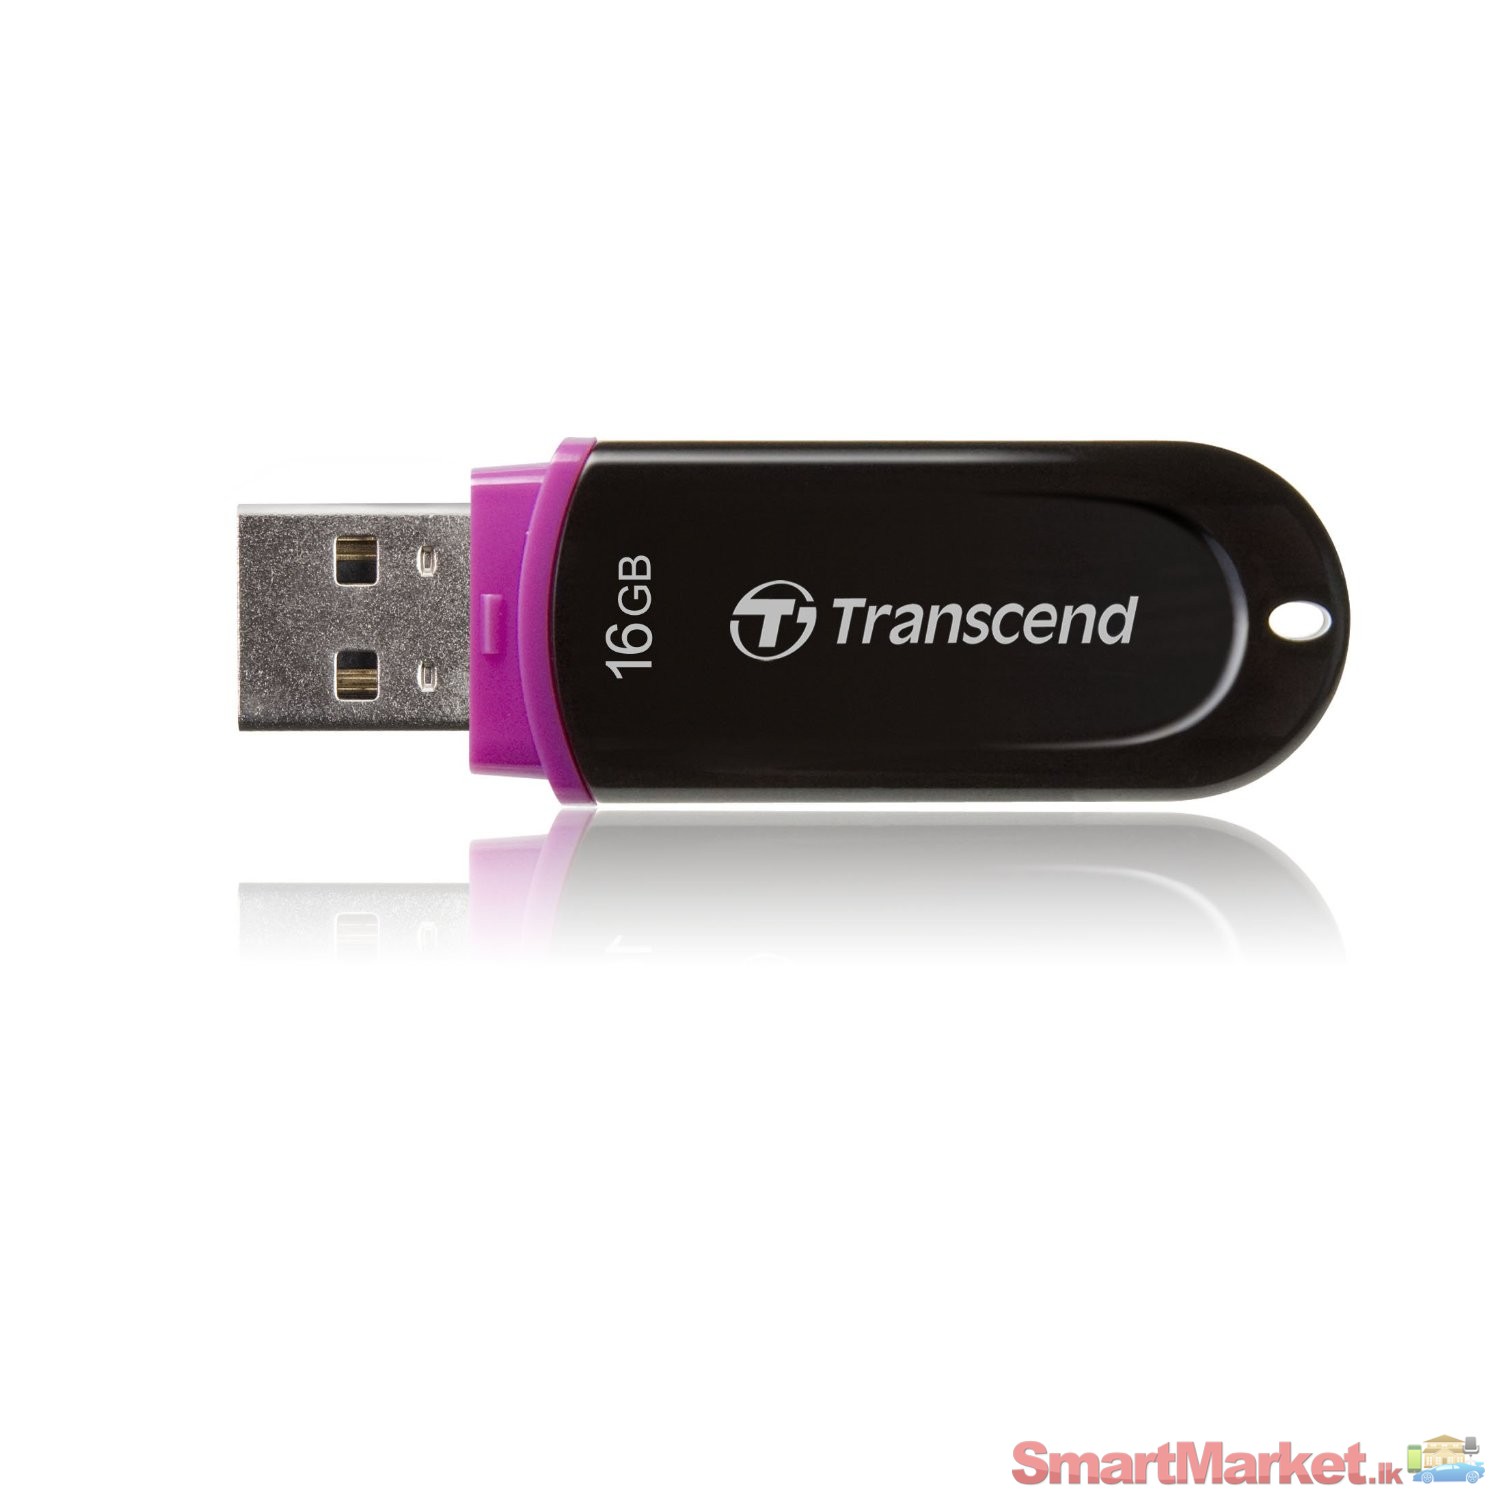 16 GB Transcend USB Memory